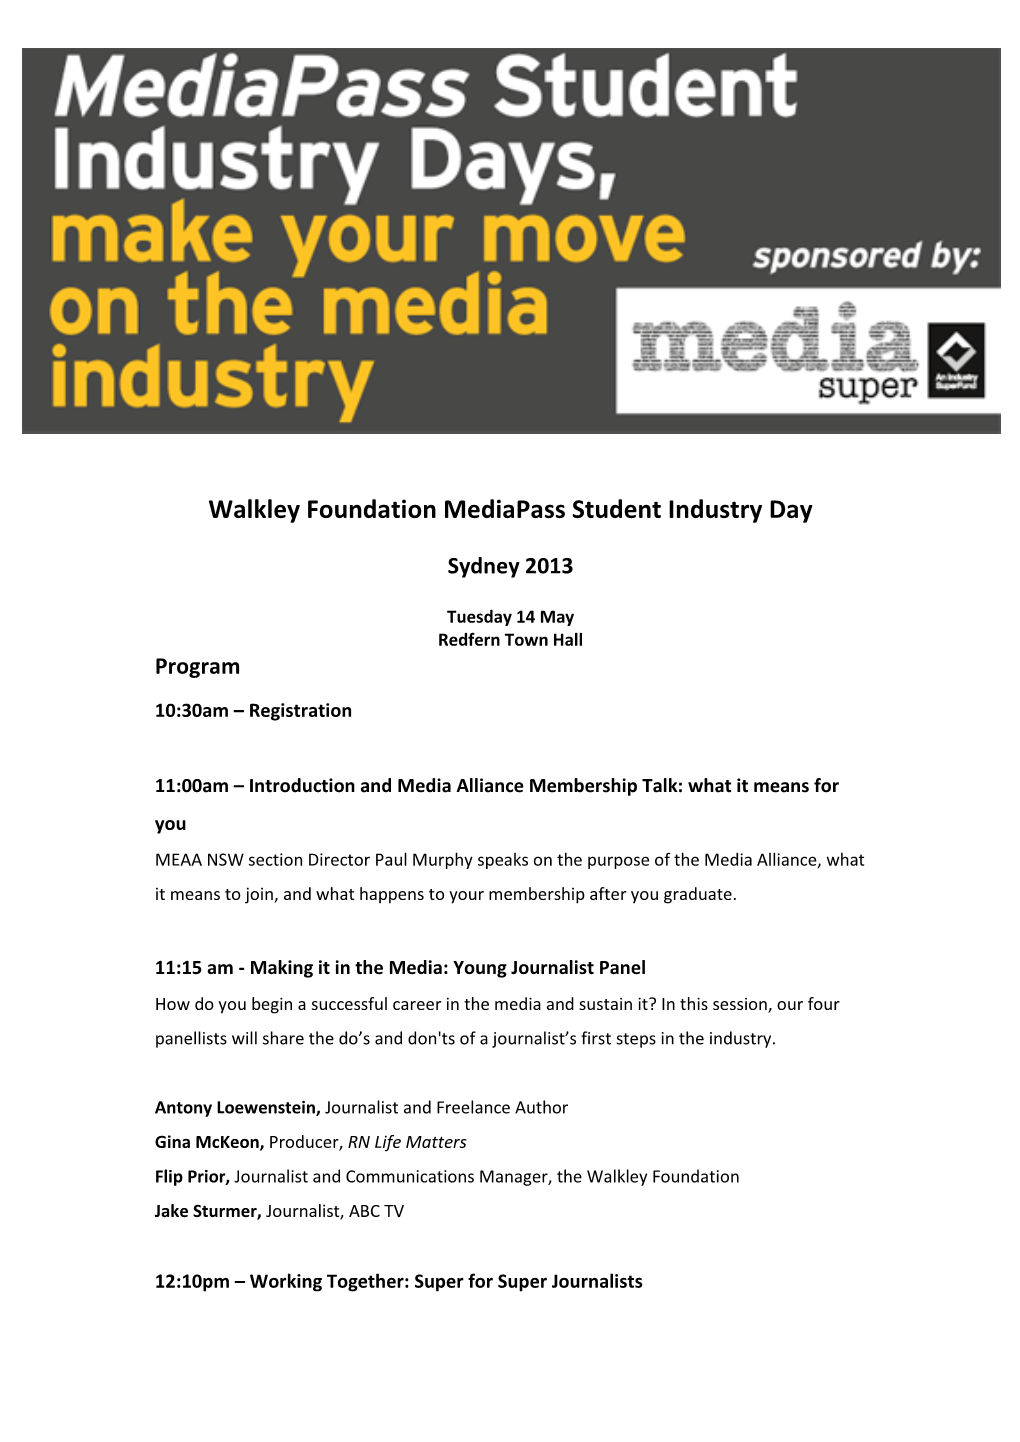 Walkley Foundation Mediapass Student Industry Day